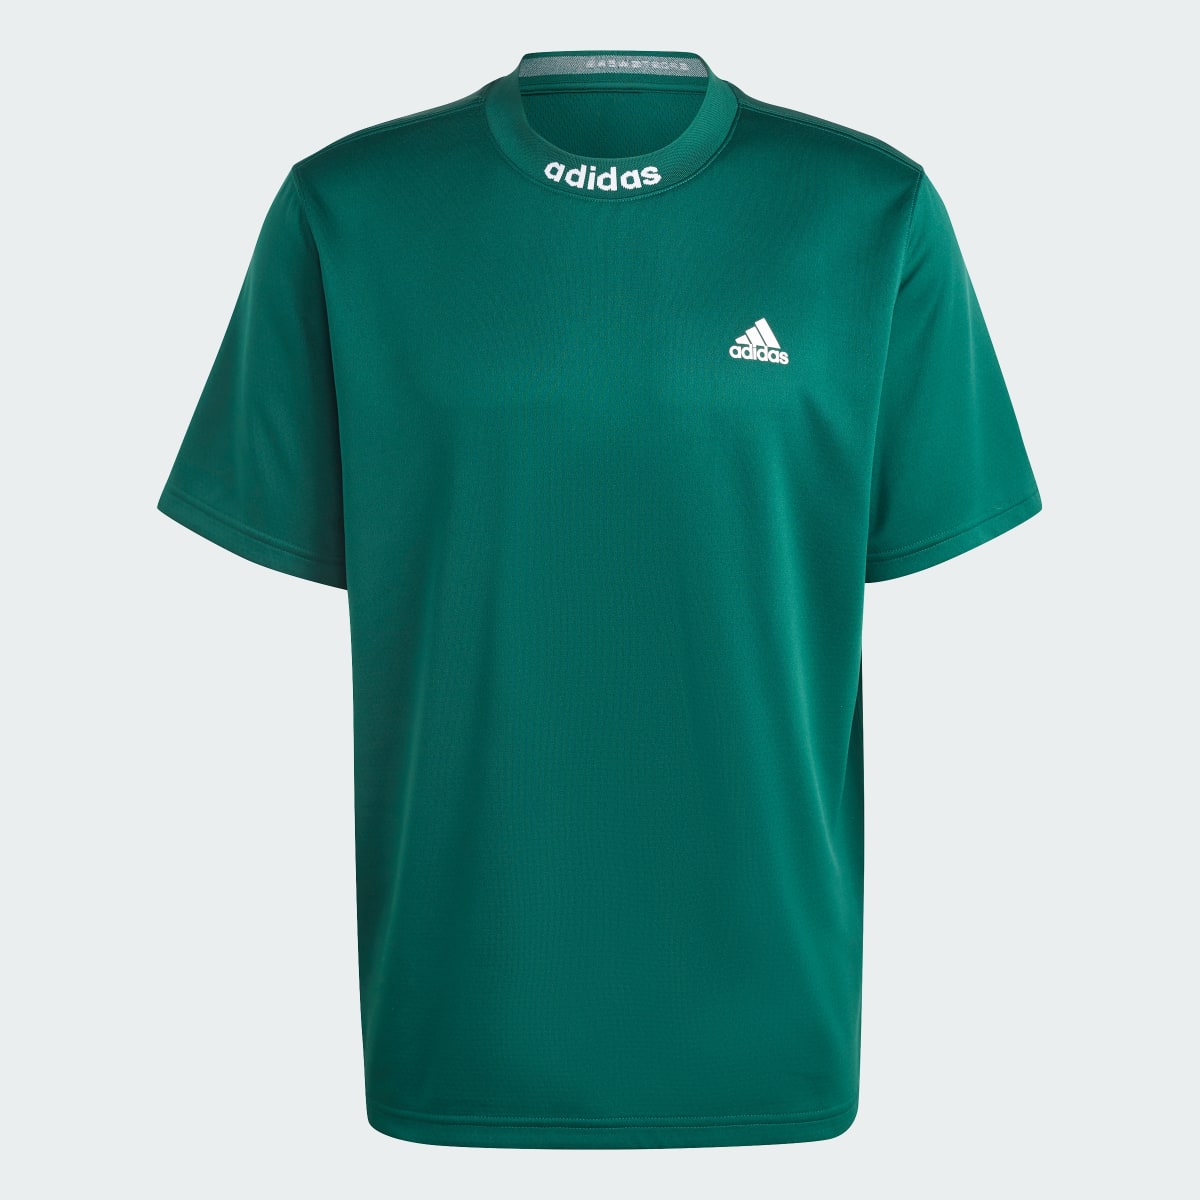 Adidas T-shirt Mesh-Back. 5